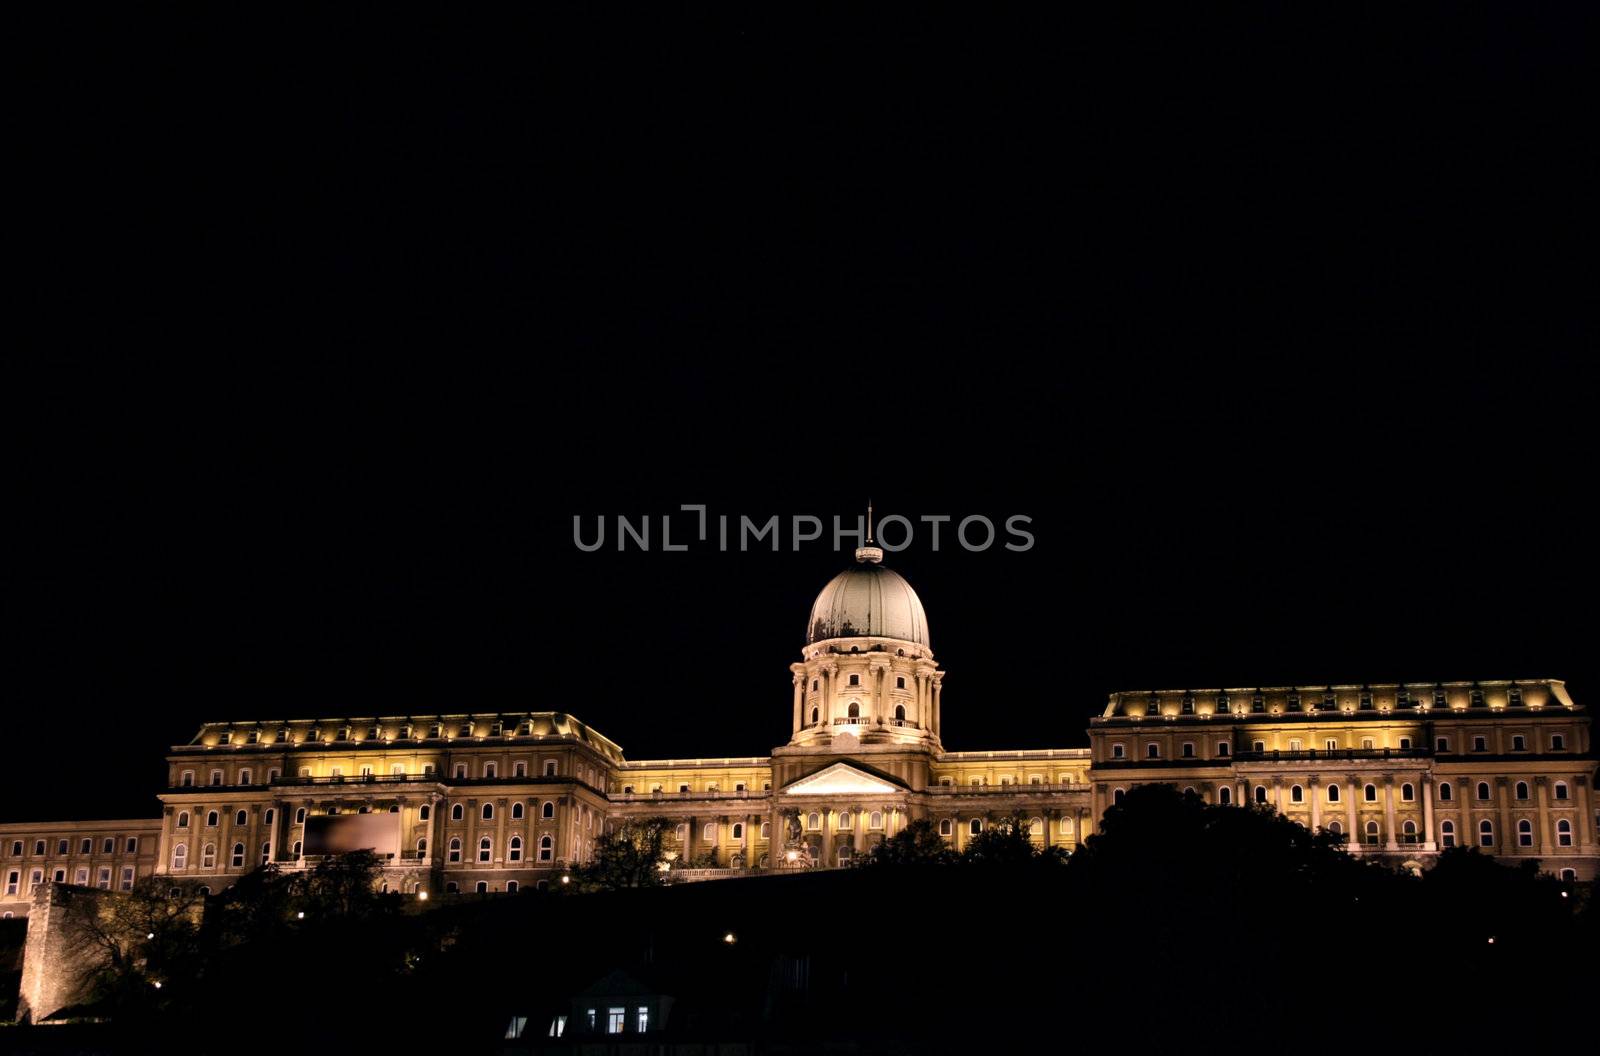 Royal castle at night, Budapest by tupungato